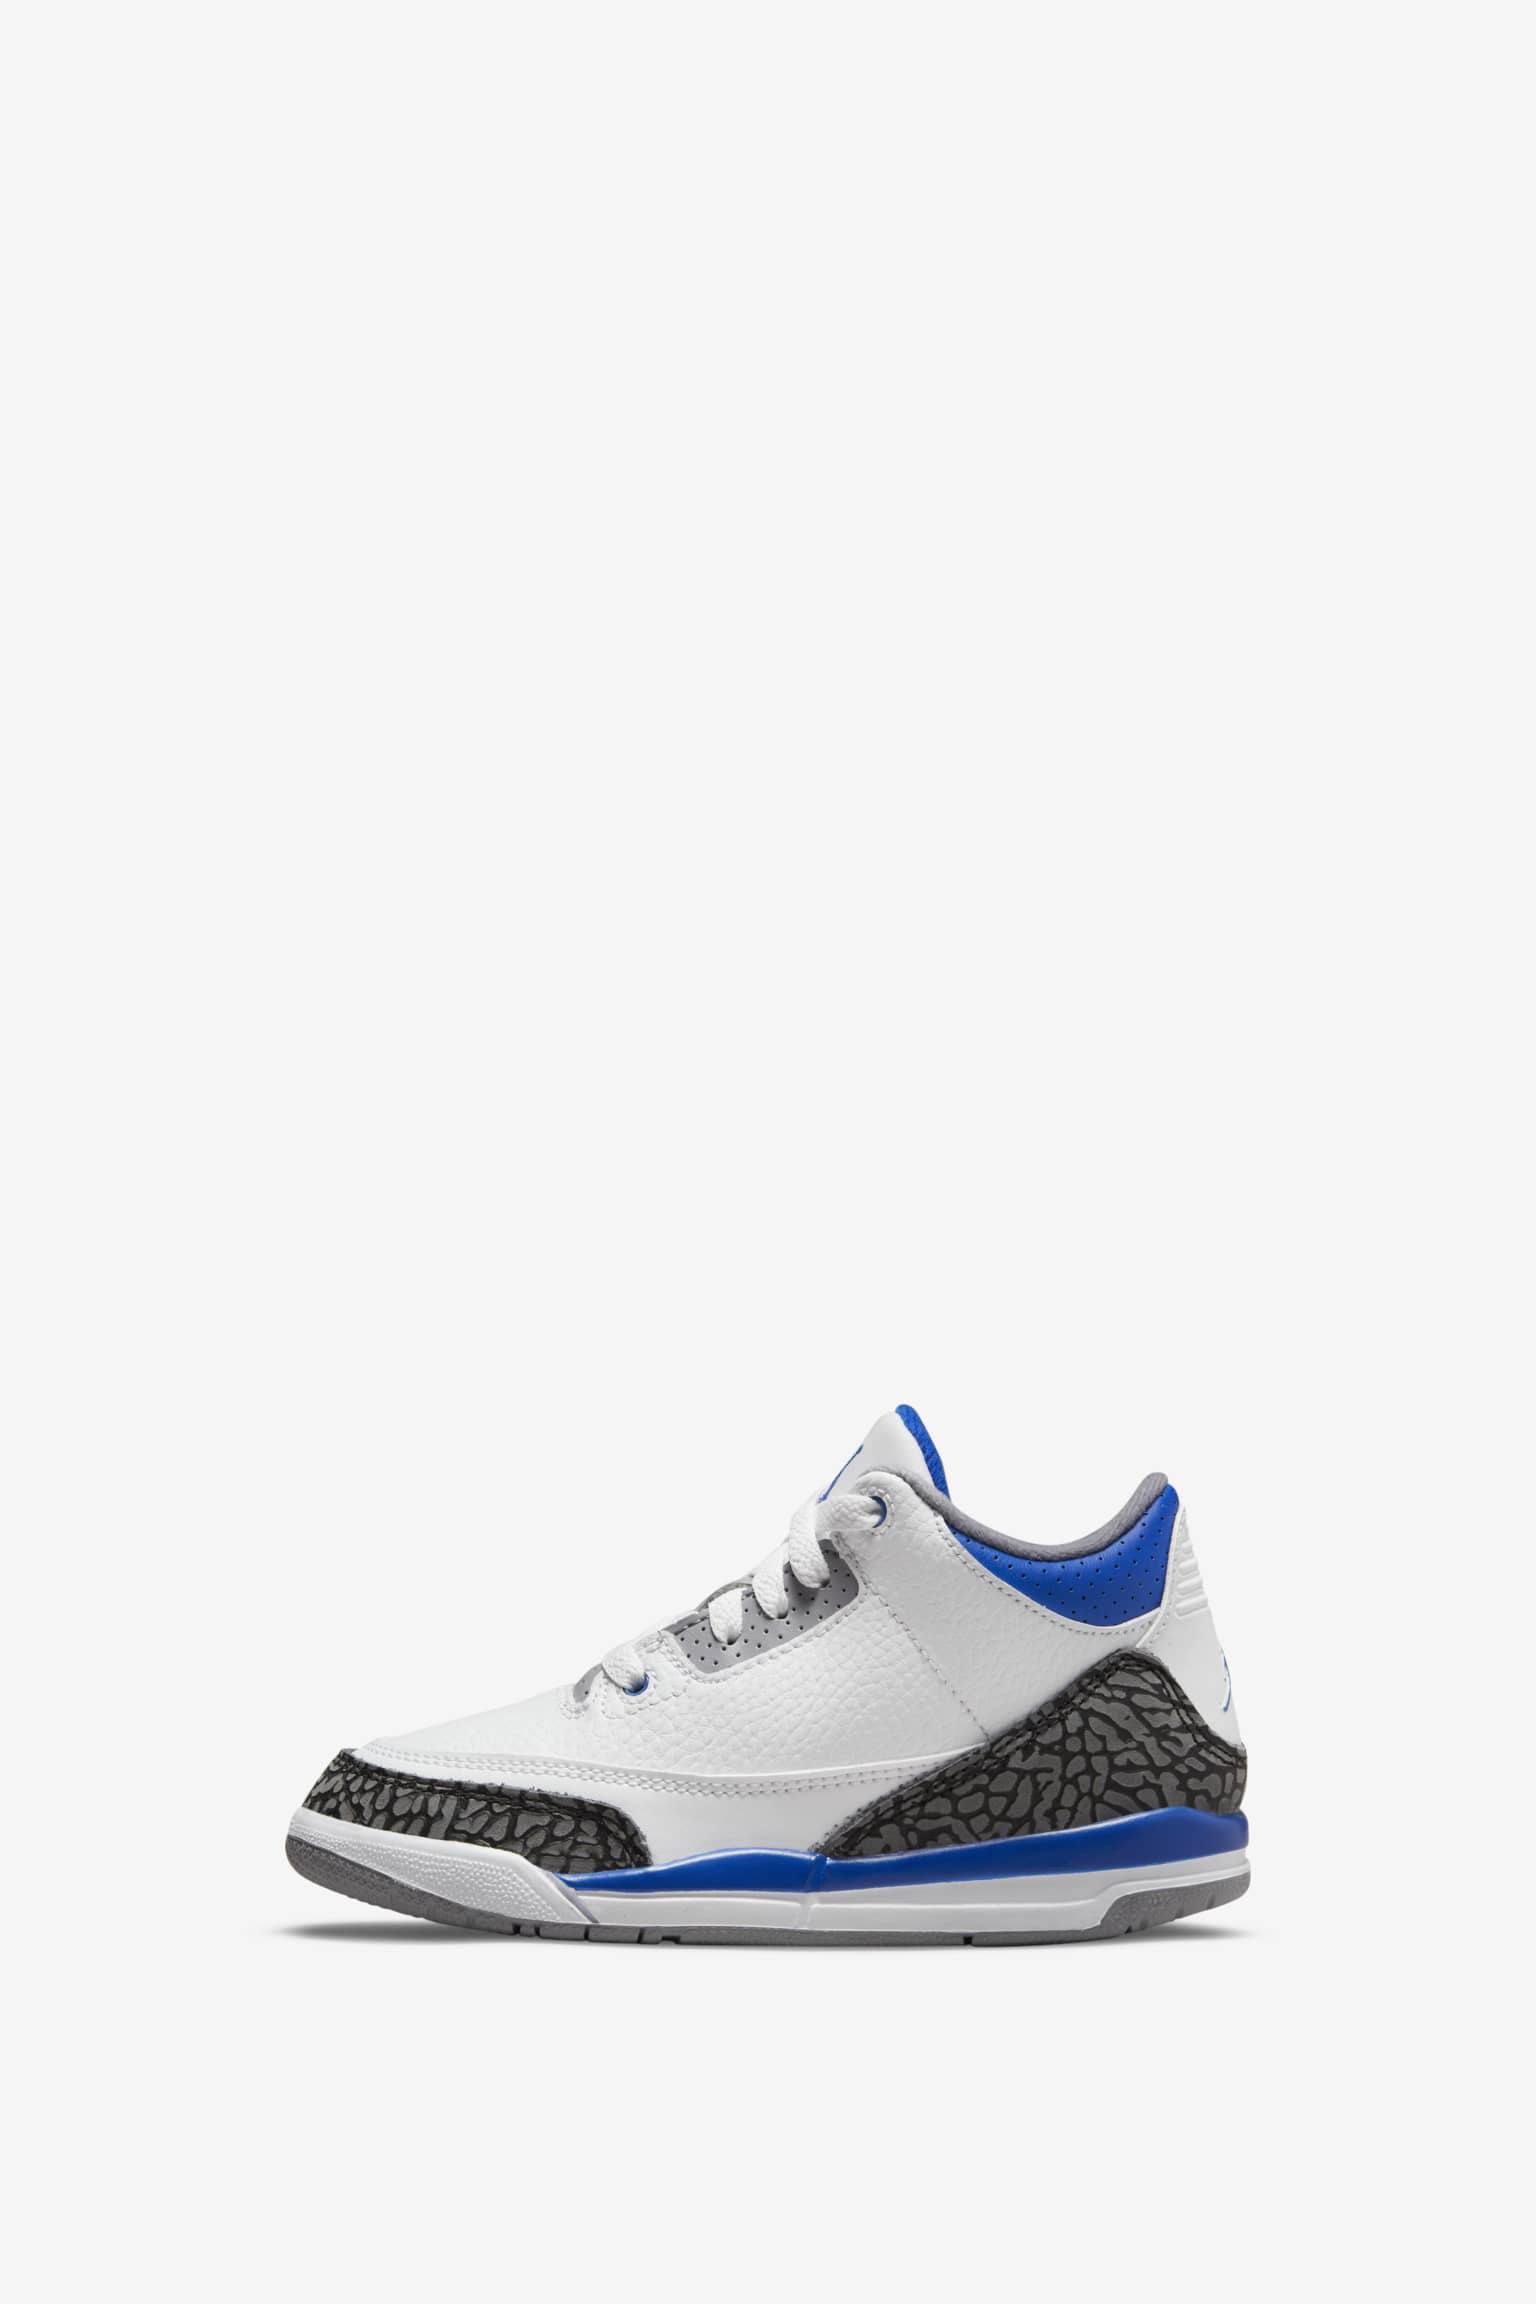 Air Jordan 3 Retro 'Racer Blue' Release Date. Nike SNKRS GB